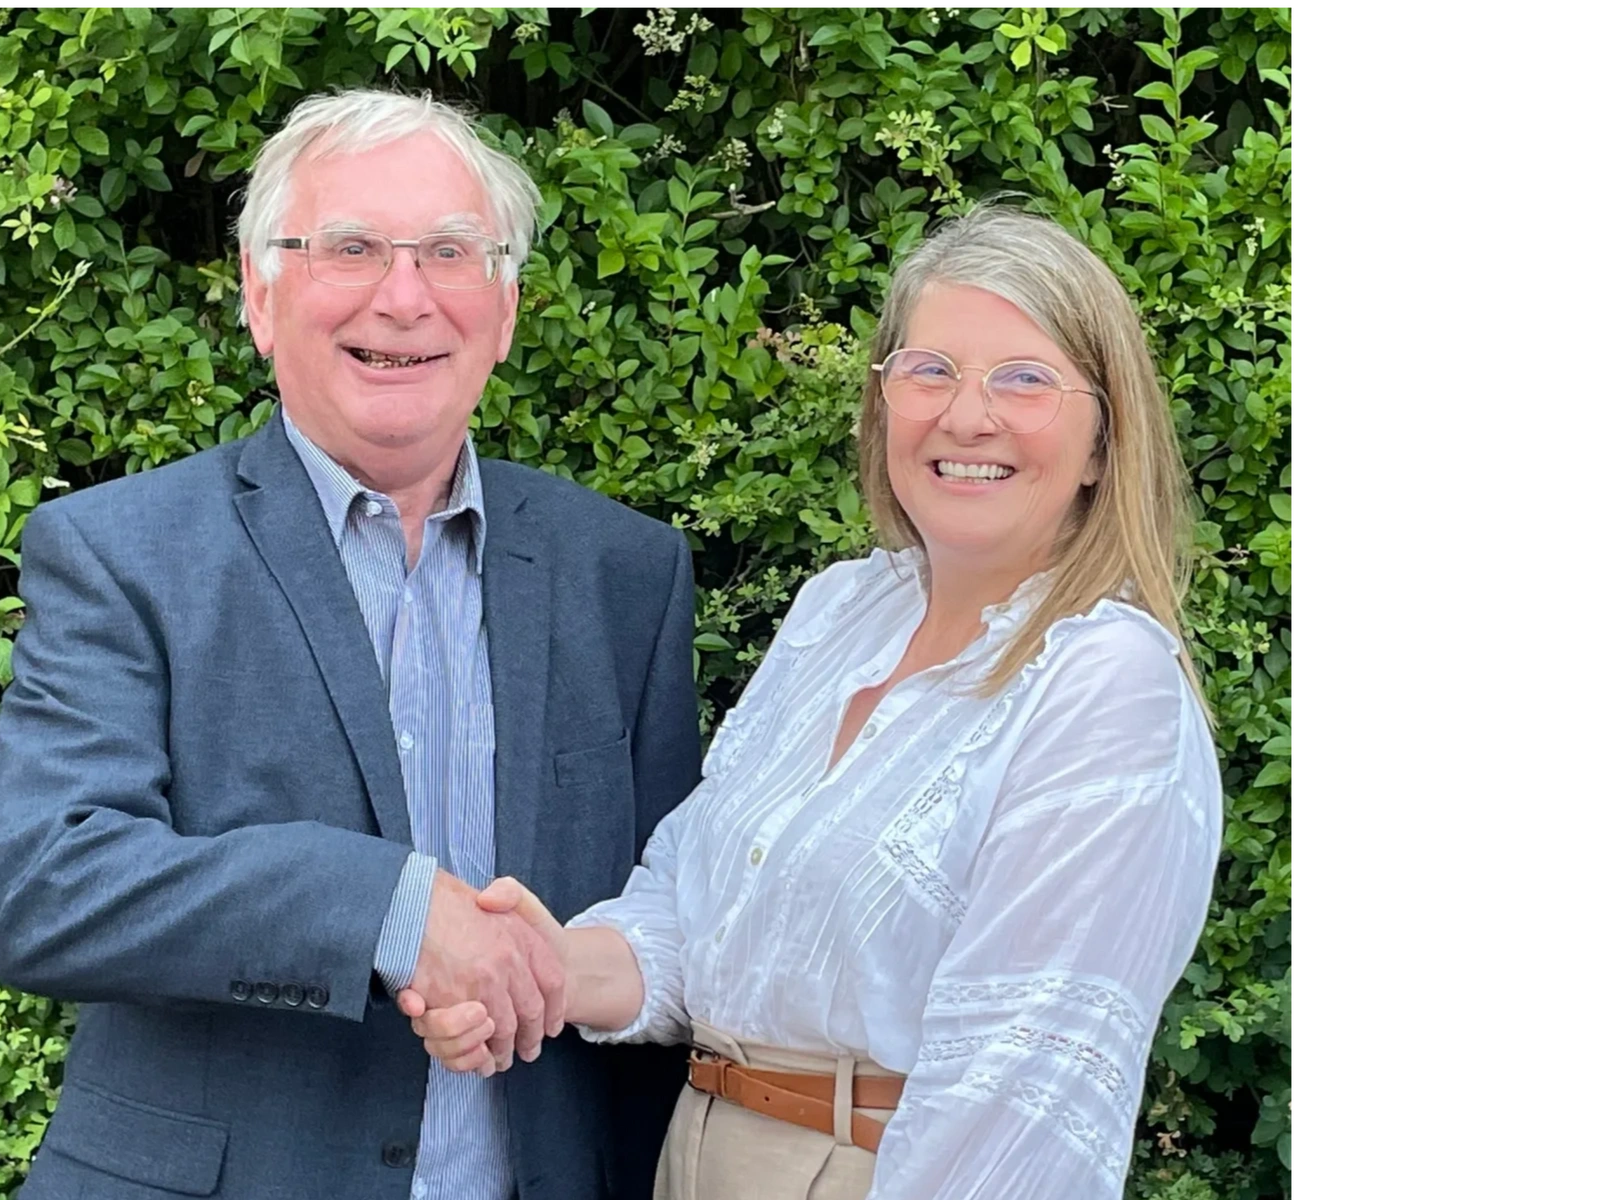 Cllr Dennis Willetts congratulates Sara Naylor, Conservative candidate